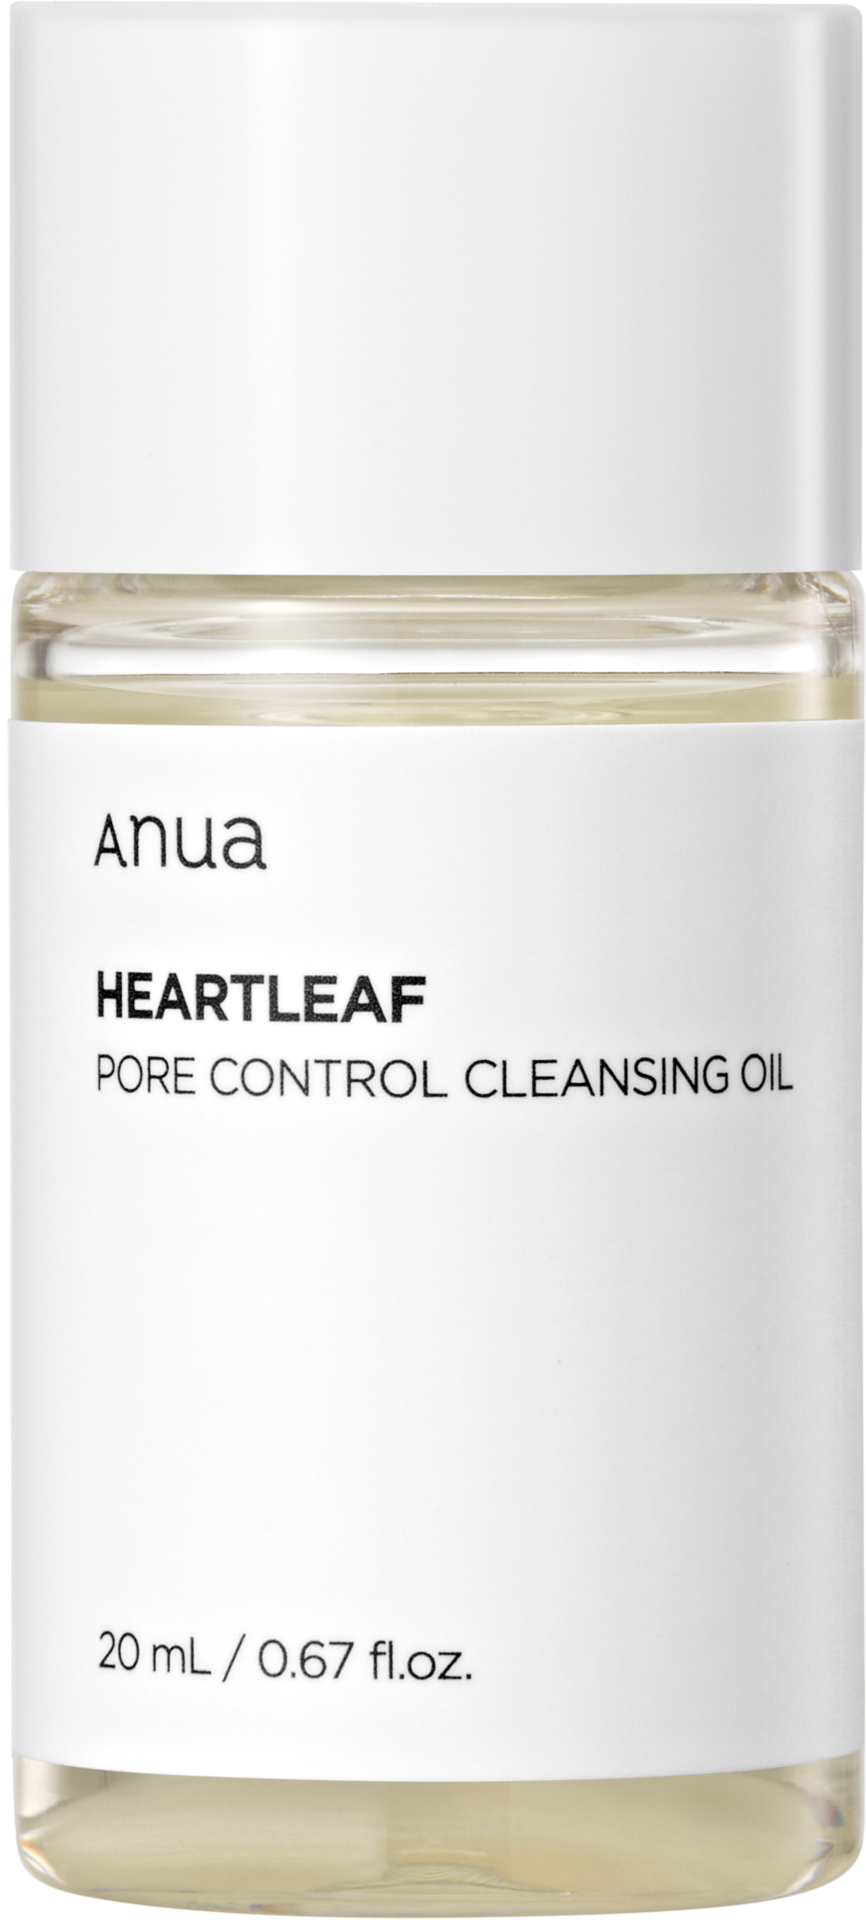 Anua Heartleaf Pore Control Cleansing Oil 20ml